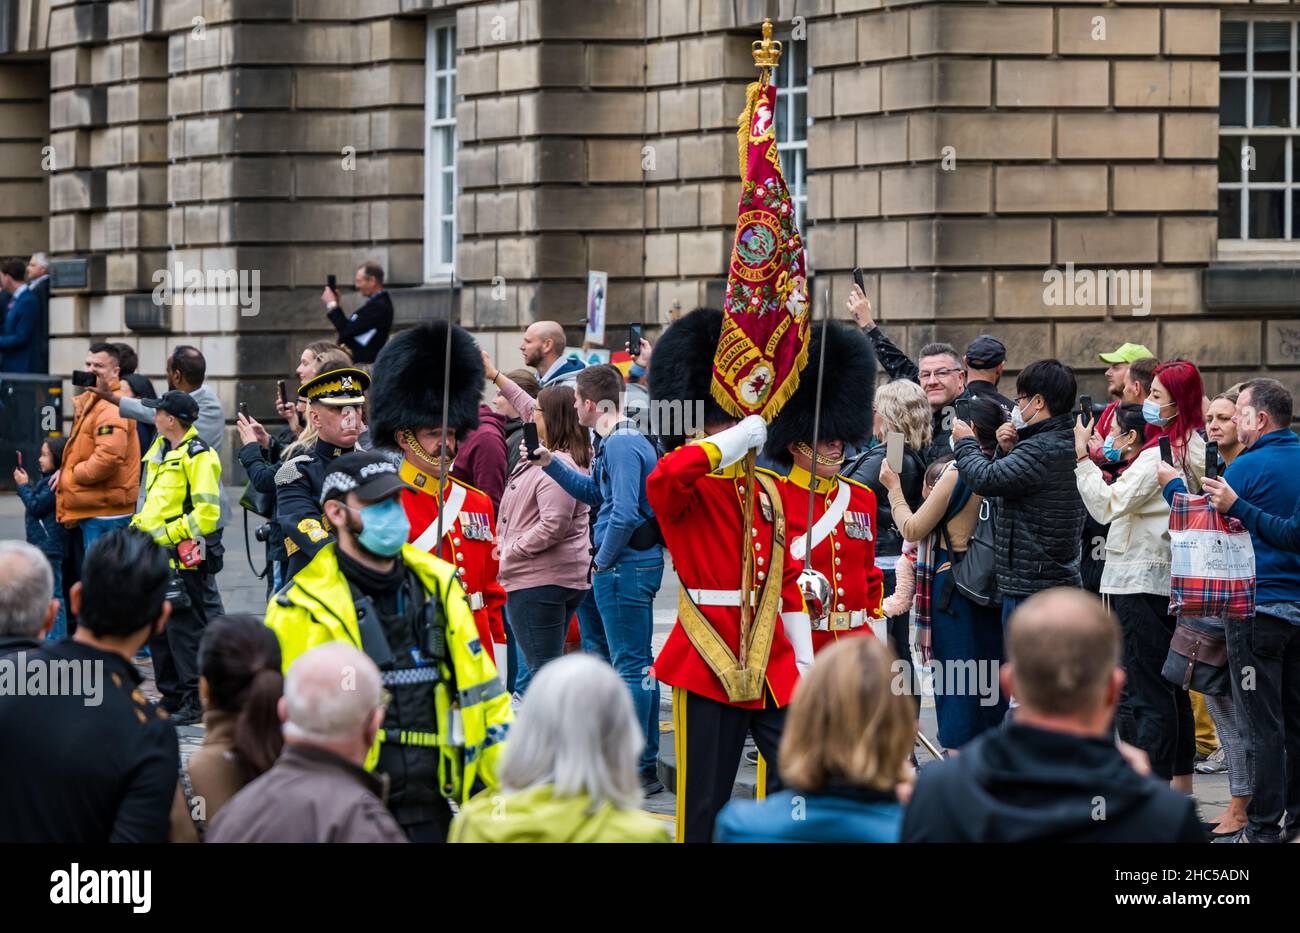 Royal Scots Dragoon Guards marching with flag standard at 50th anniversary parade, Royal Mile, Edinburgh, Scotland, UK Stock Photo